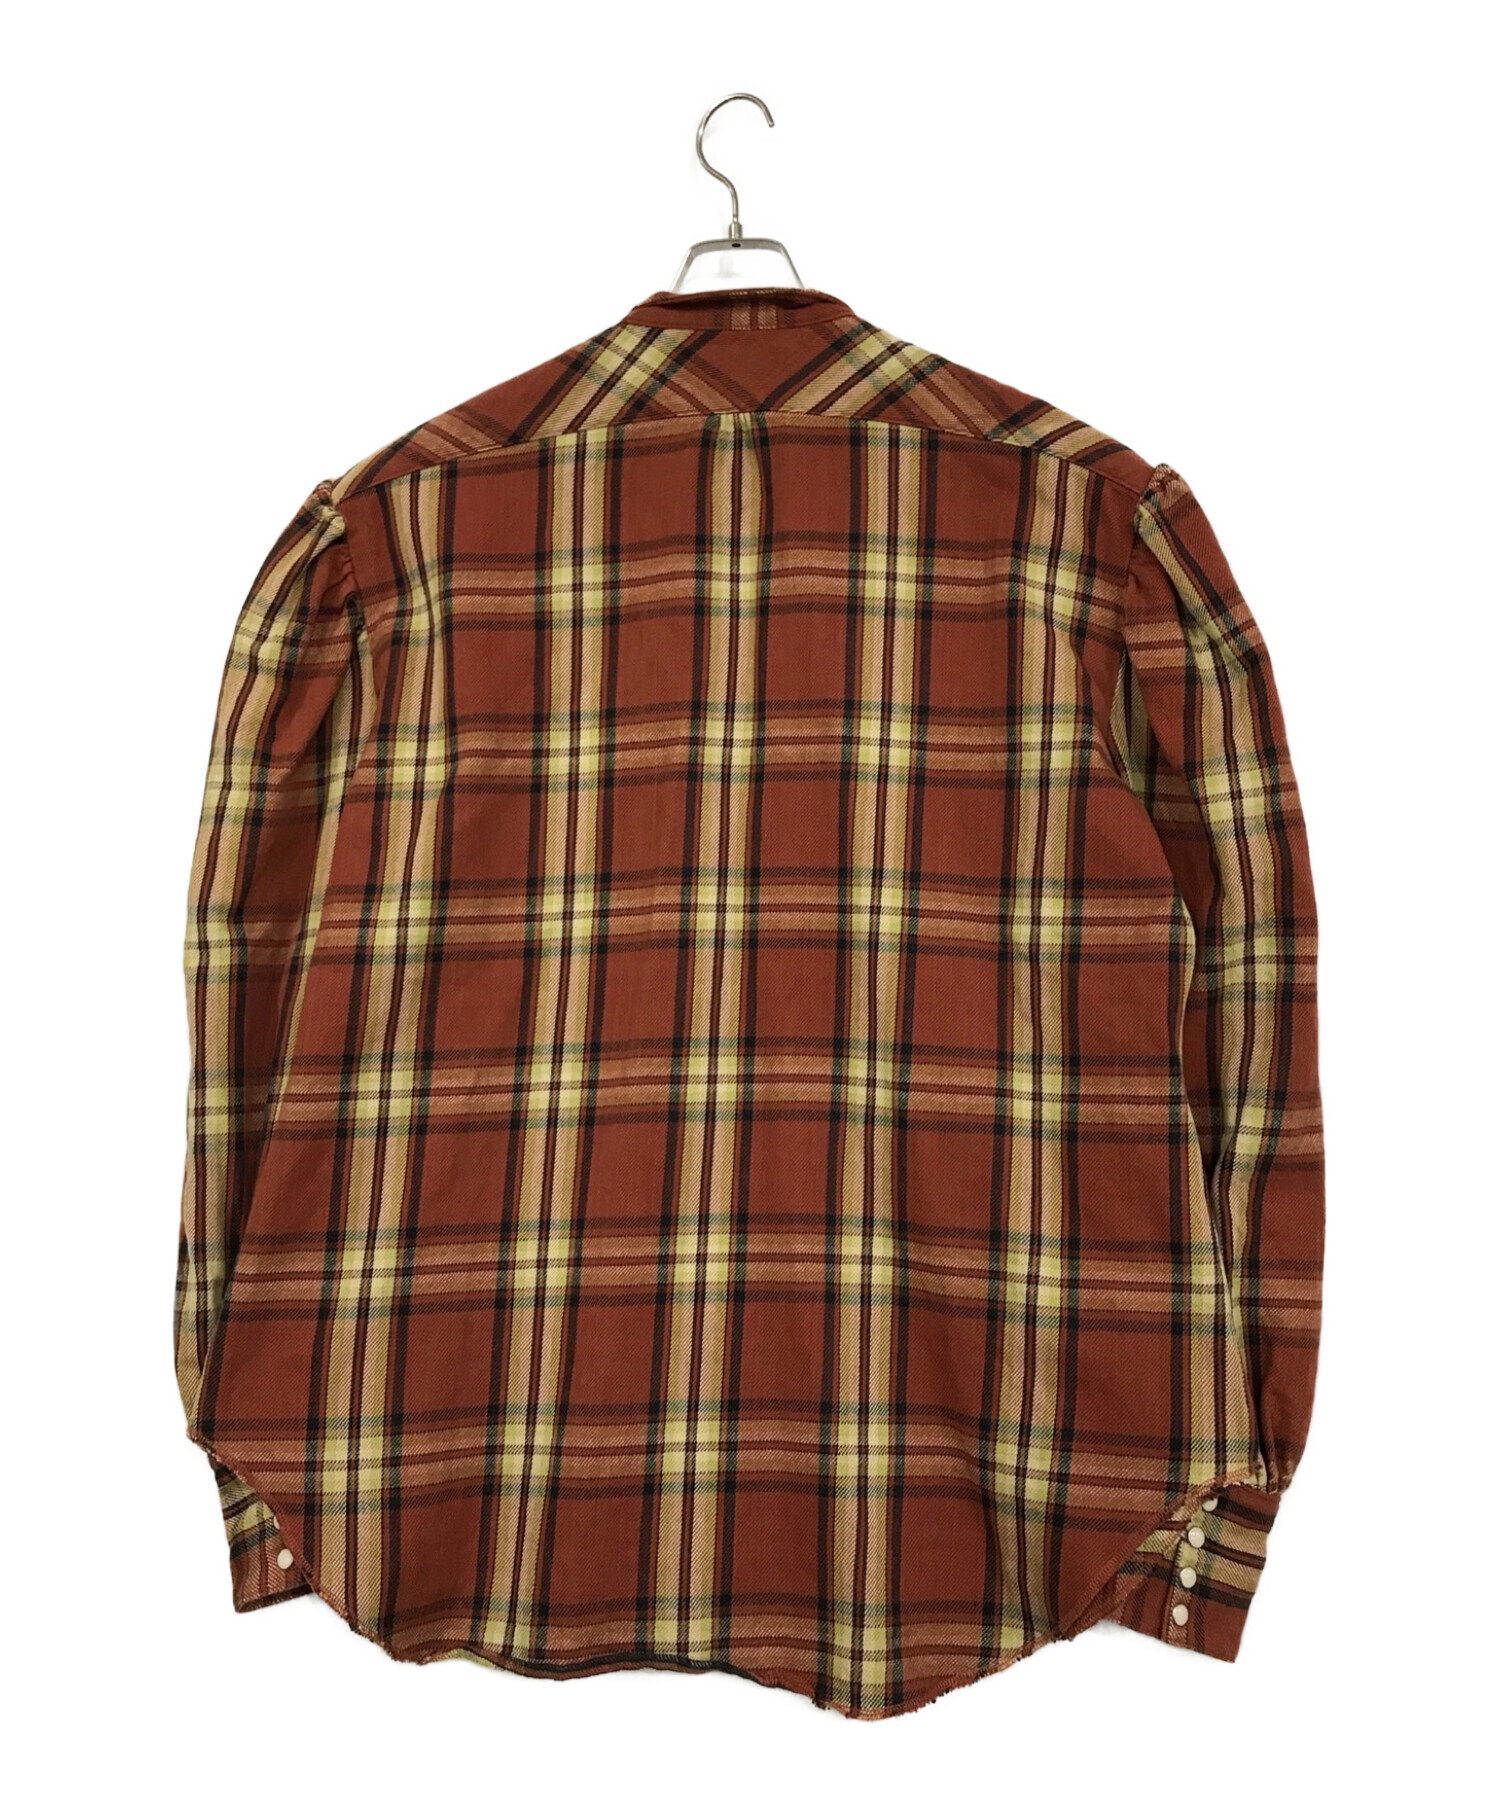 KAPITAL (キャピタル) ヘビーネルチェック オペラスリーブコンポーザーシャツ ブラウン×グリーン サイズ:SIZE 3